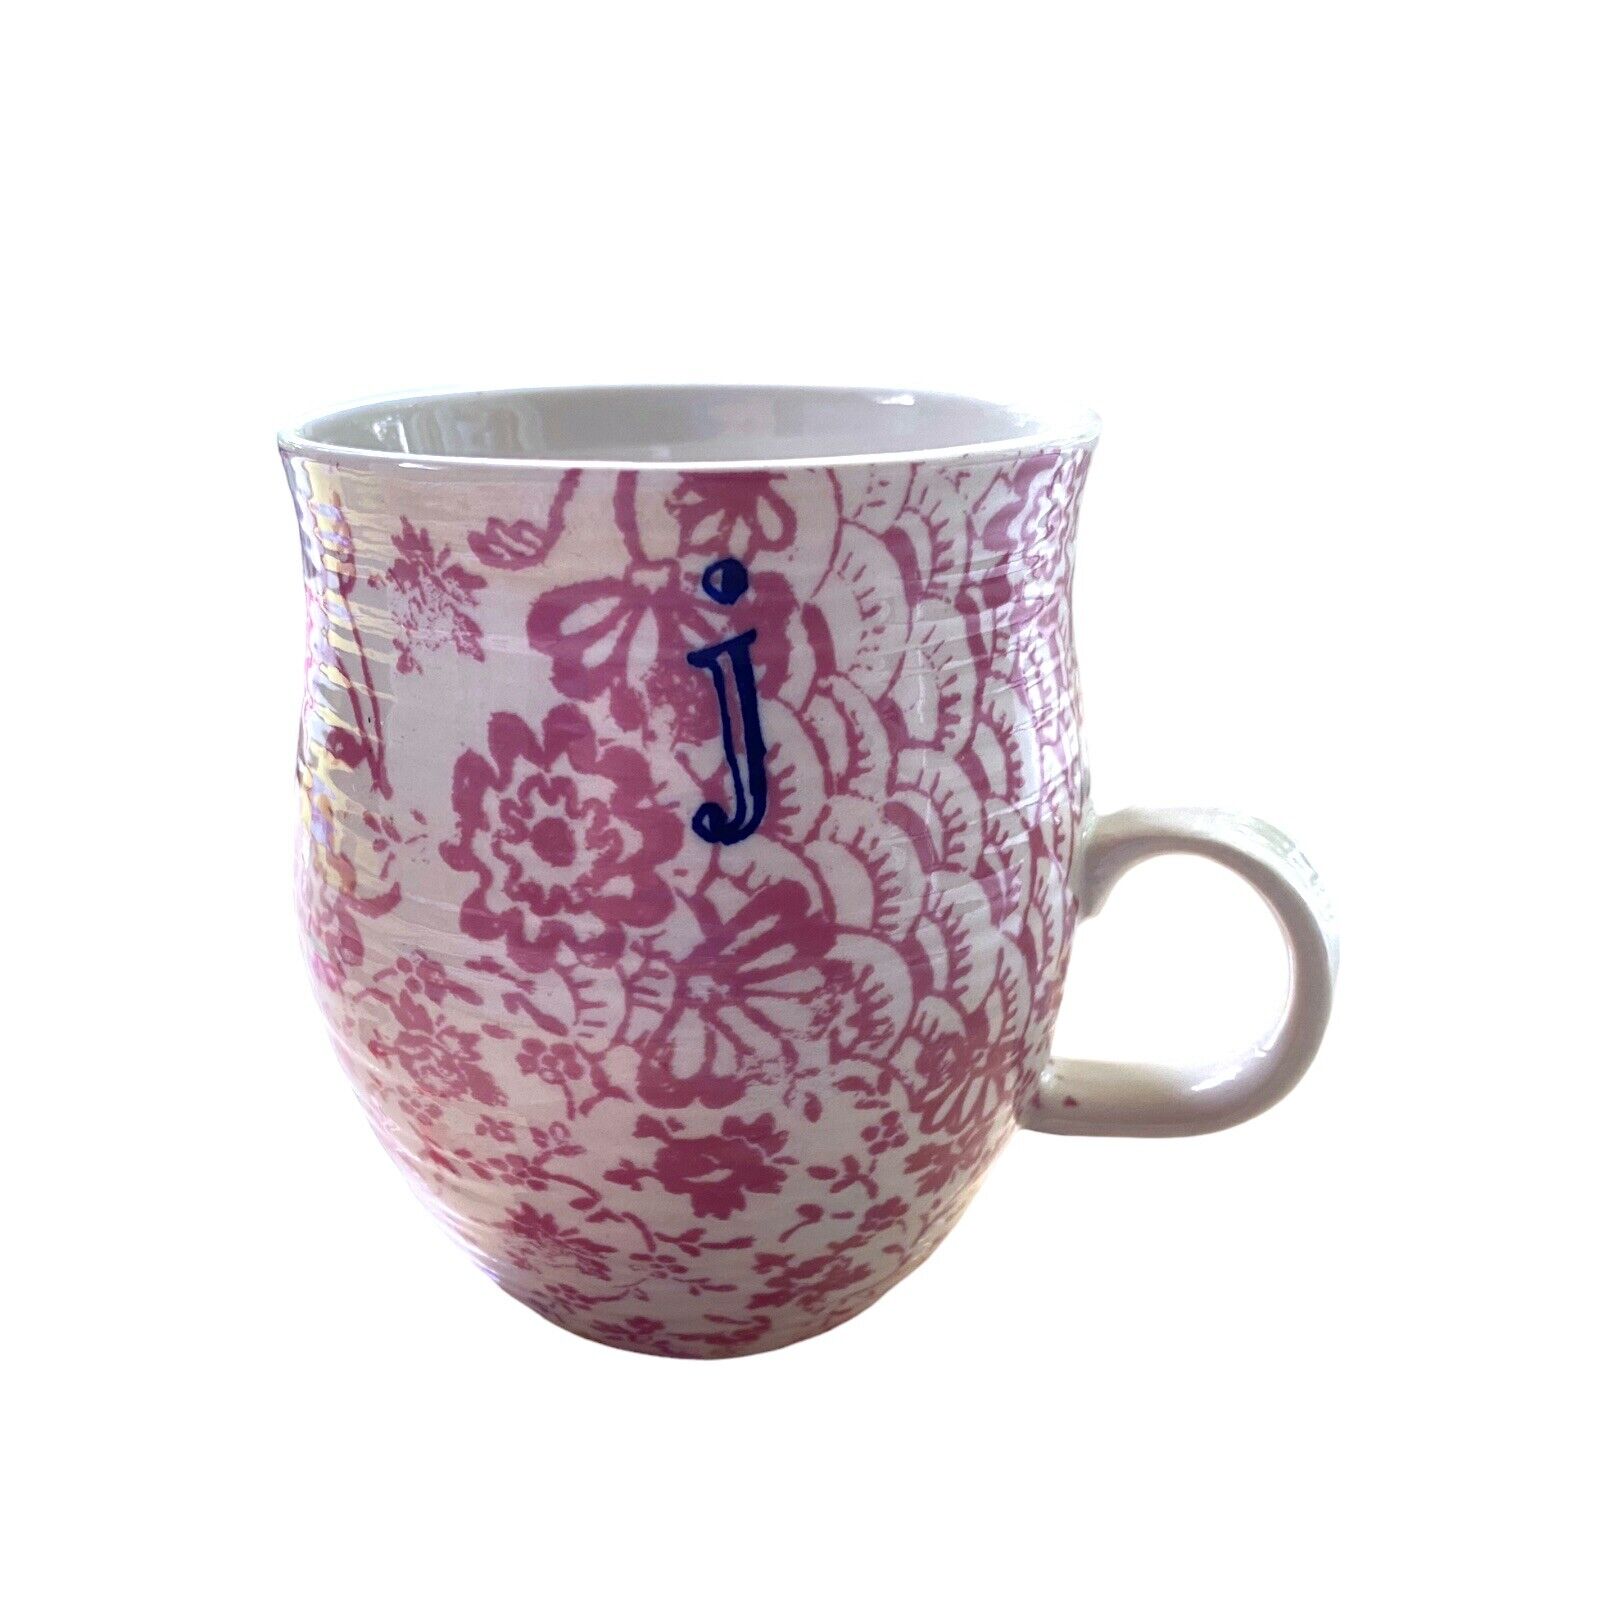 Anthropologie Pink White Floral Mug Blue J Monogram Initial Cup Mug Lower Case j